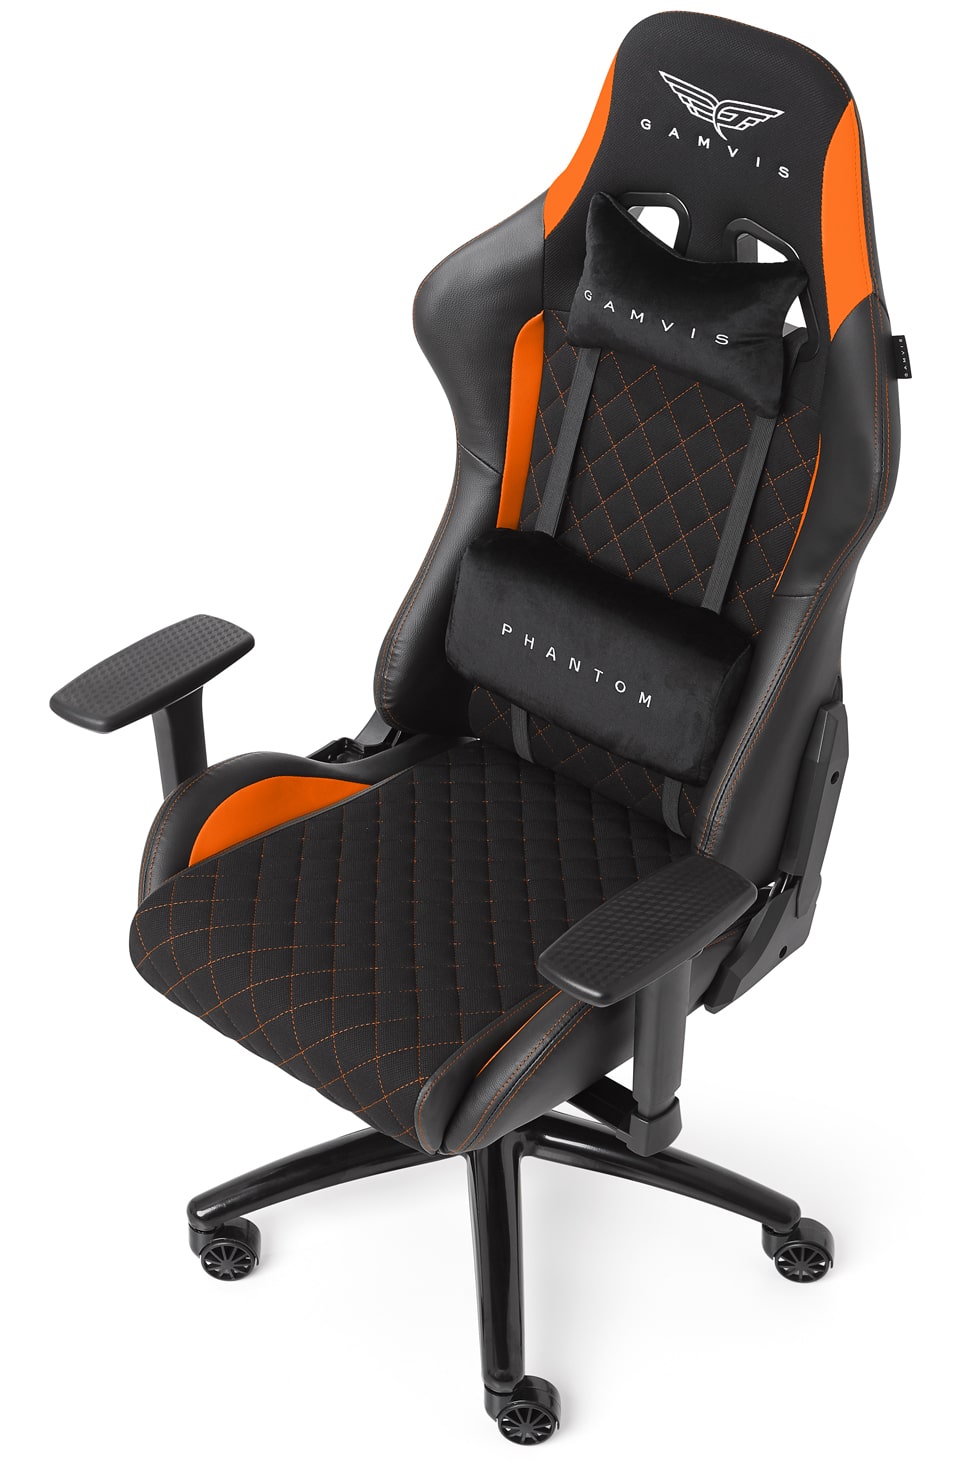 Gamvis PHANTOM Fabric Gaming Chair - Black/Orange